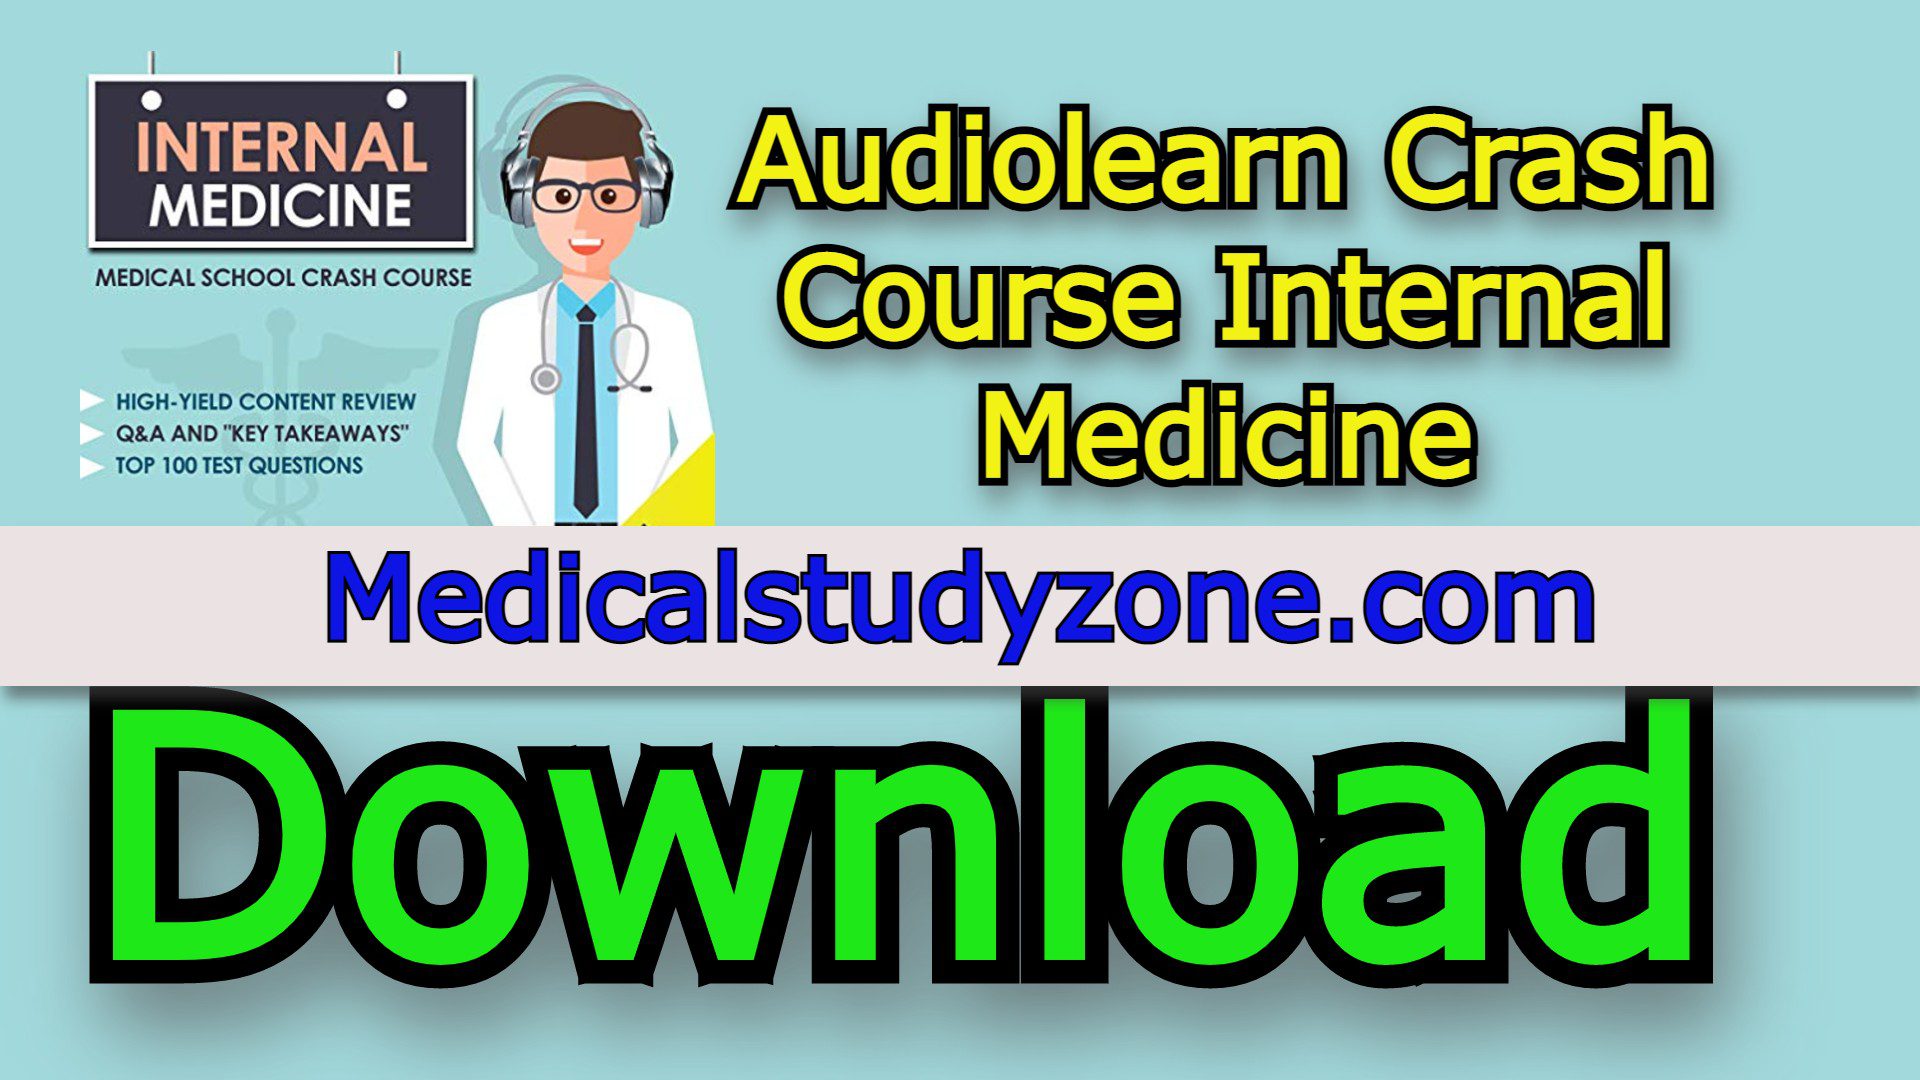 Audiolearn Crash Course Internal Medicine 2021 Free Download